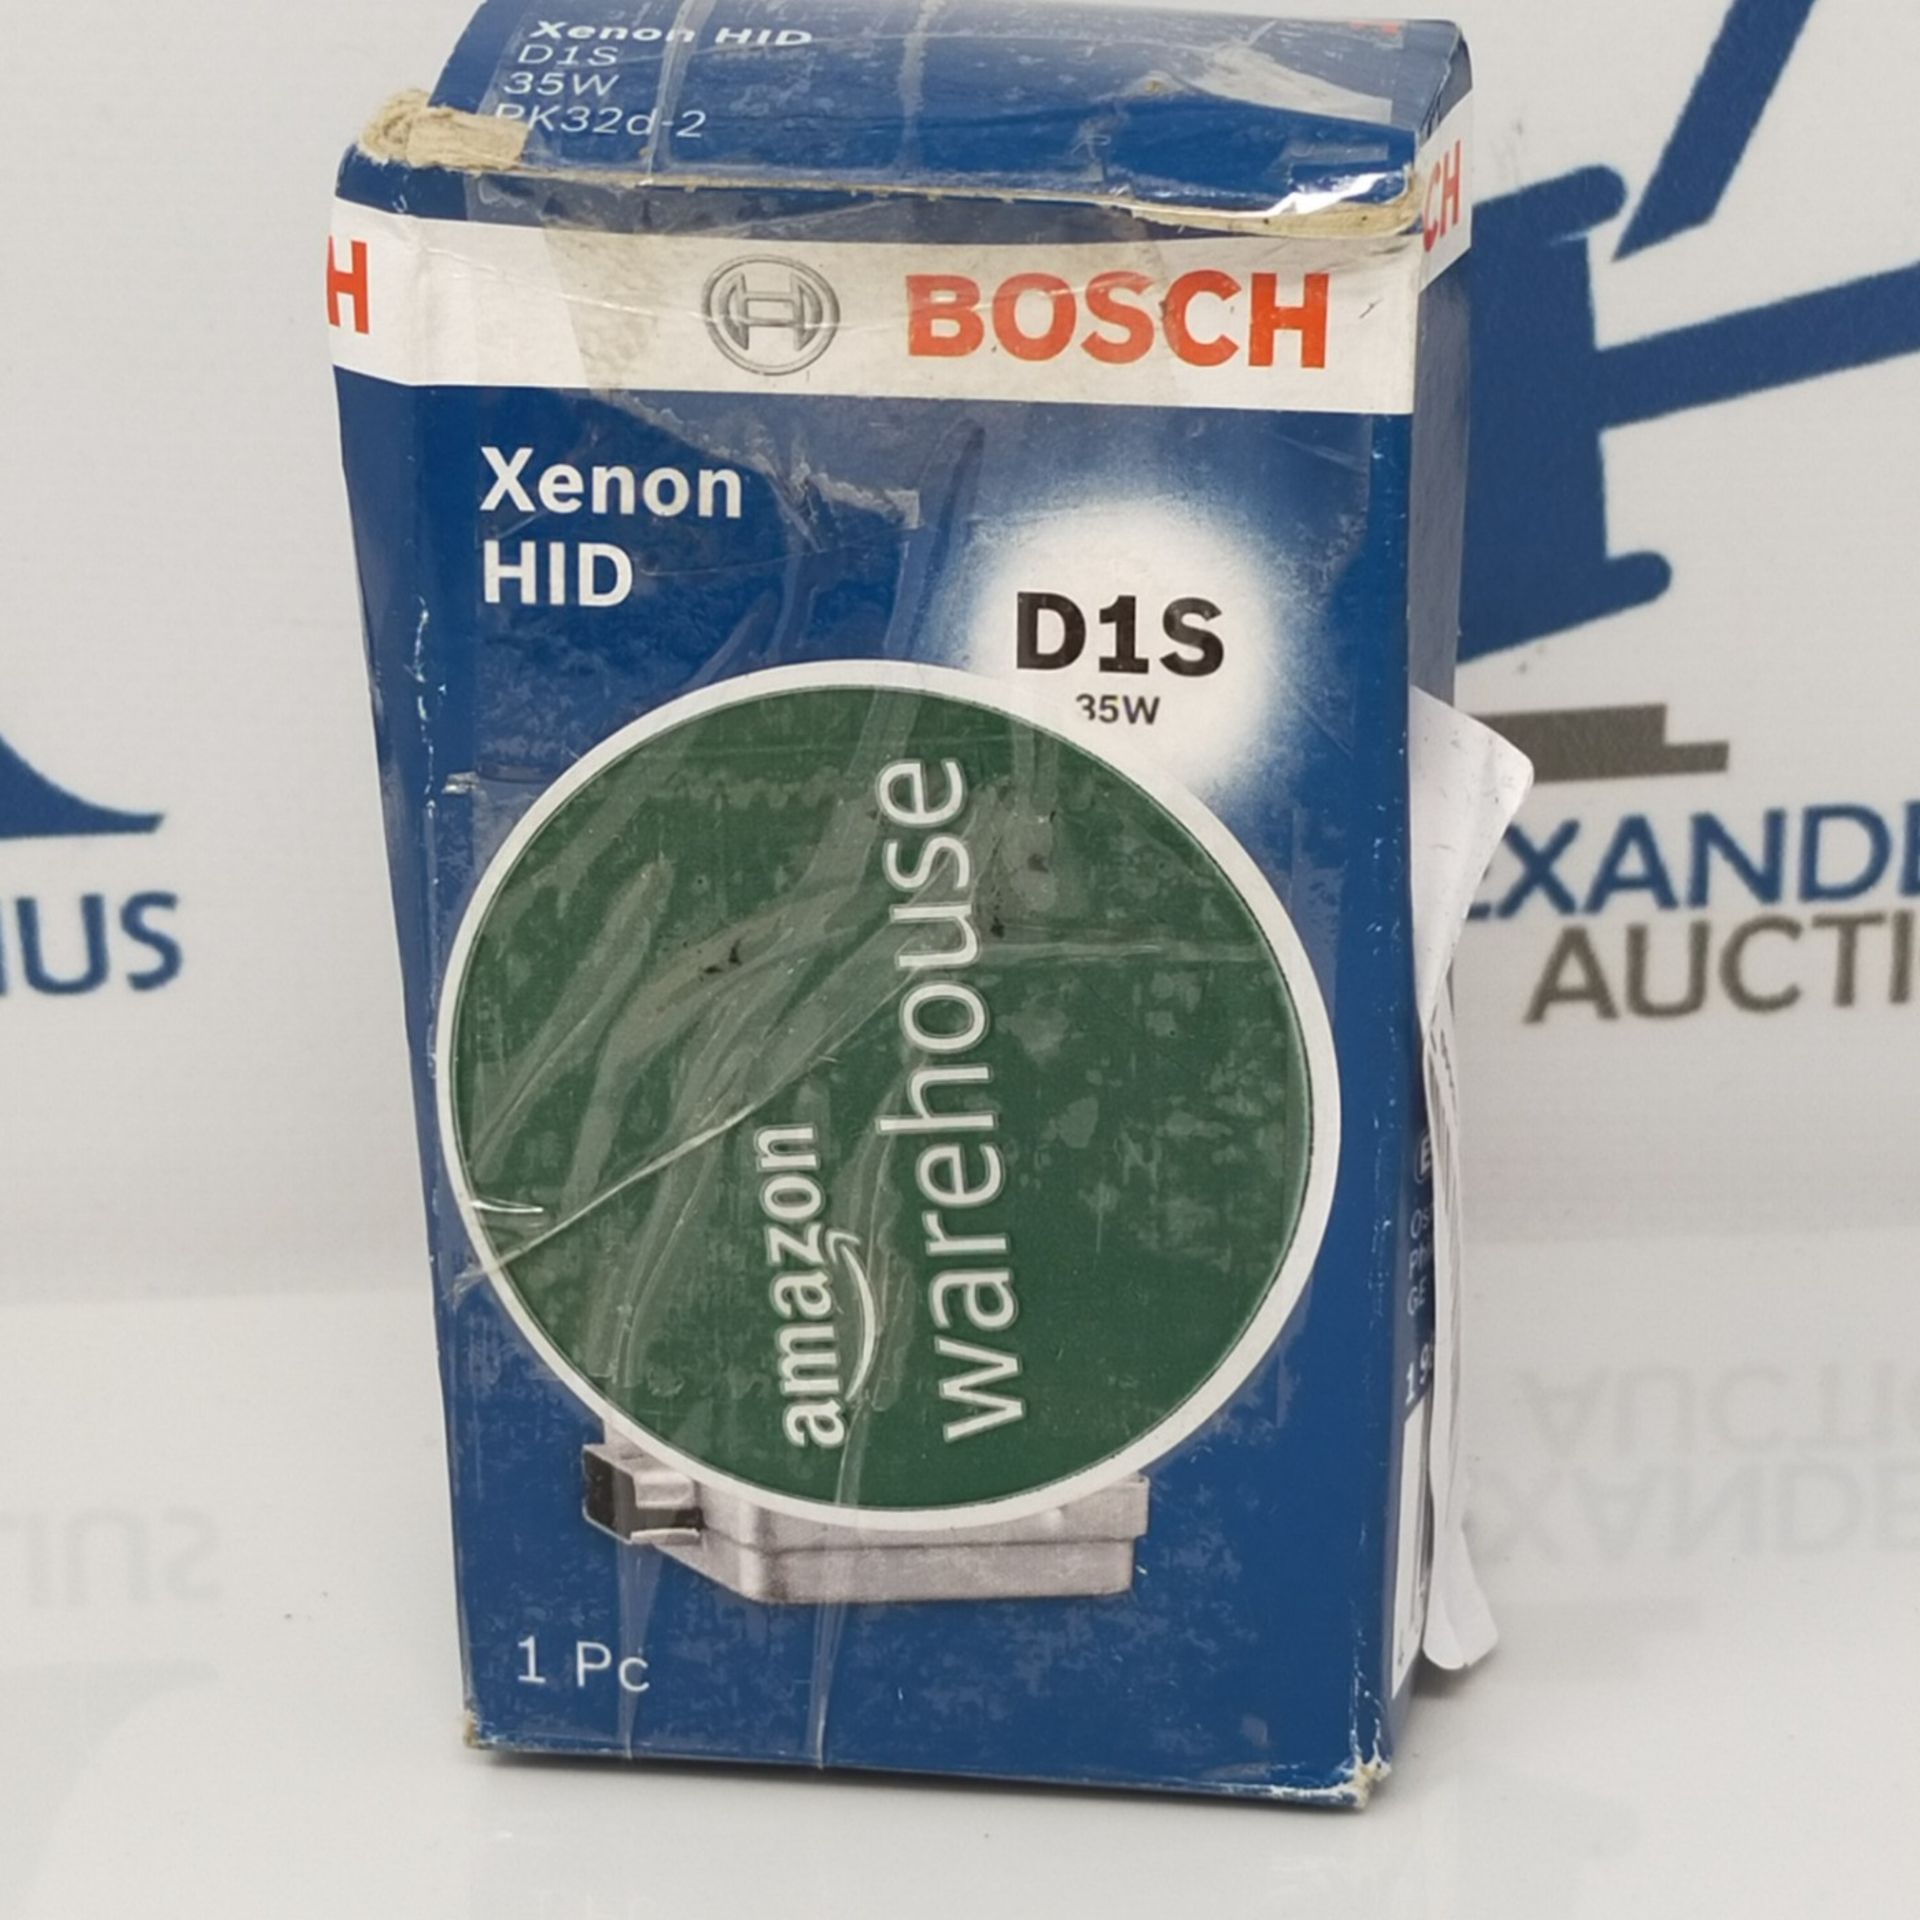 Bosch D1S Xenon HID Headlight Bulb - 35W PK32d-2 - 1 Bulb - Image 2 of 3